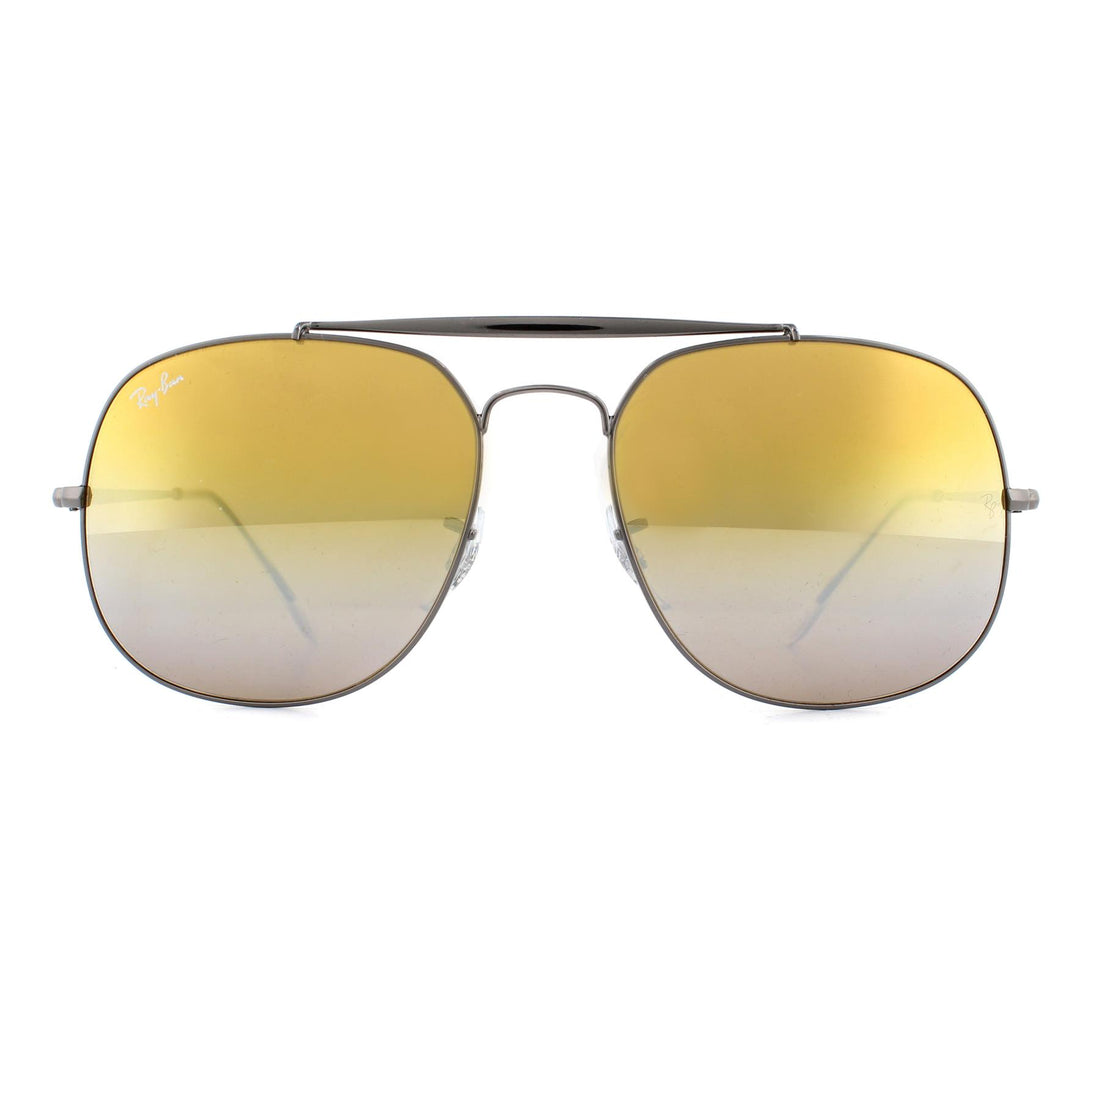 Ray-Ban General RB3561 Sunglasses Gunmetal Brown Gradient Mirror